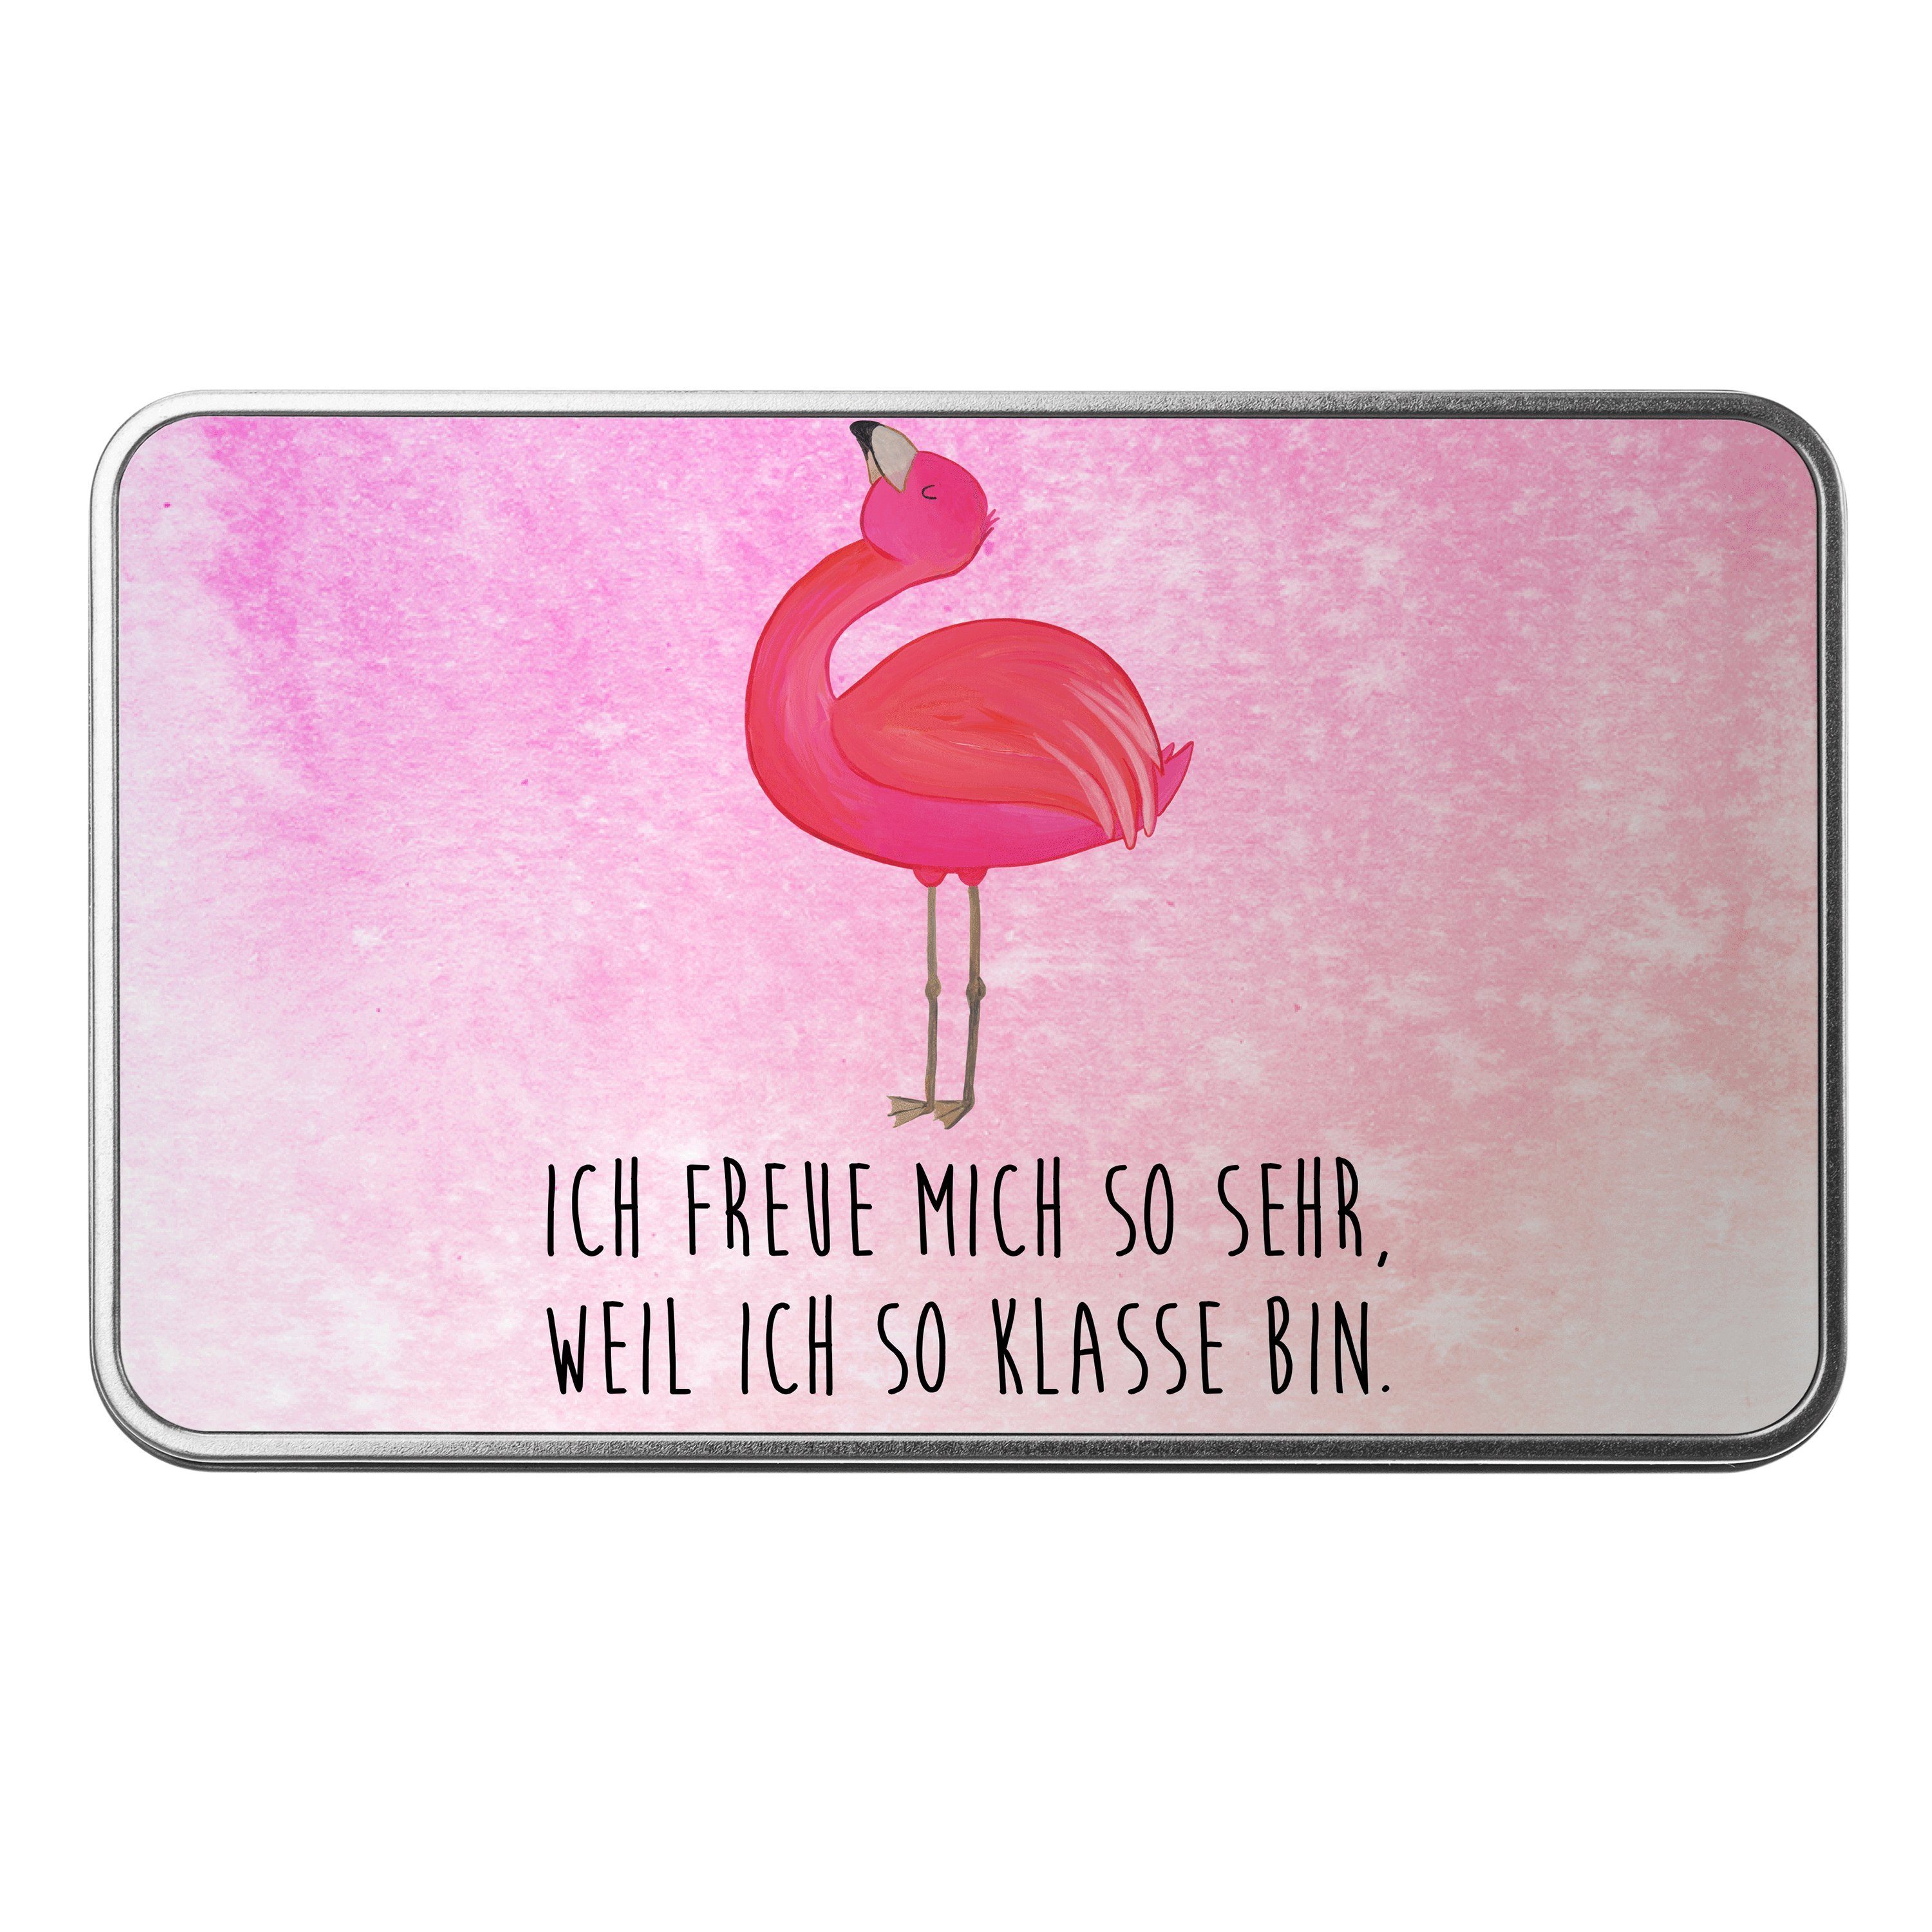 Mr. & Mrs. Panda Dose Flamingo stolz - Aquarell Pink - Geschenk, Vorratsdose, Aufbewahrungs (1 St)